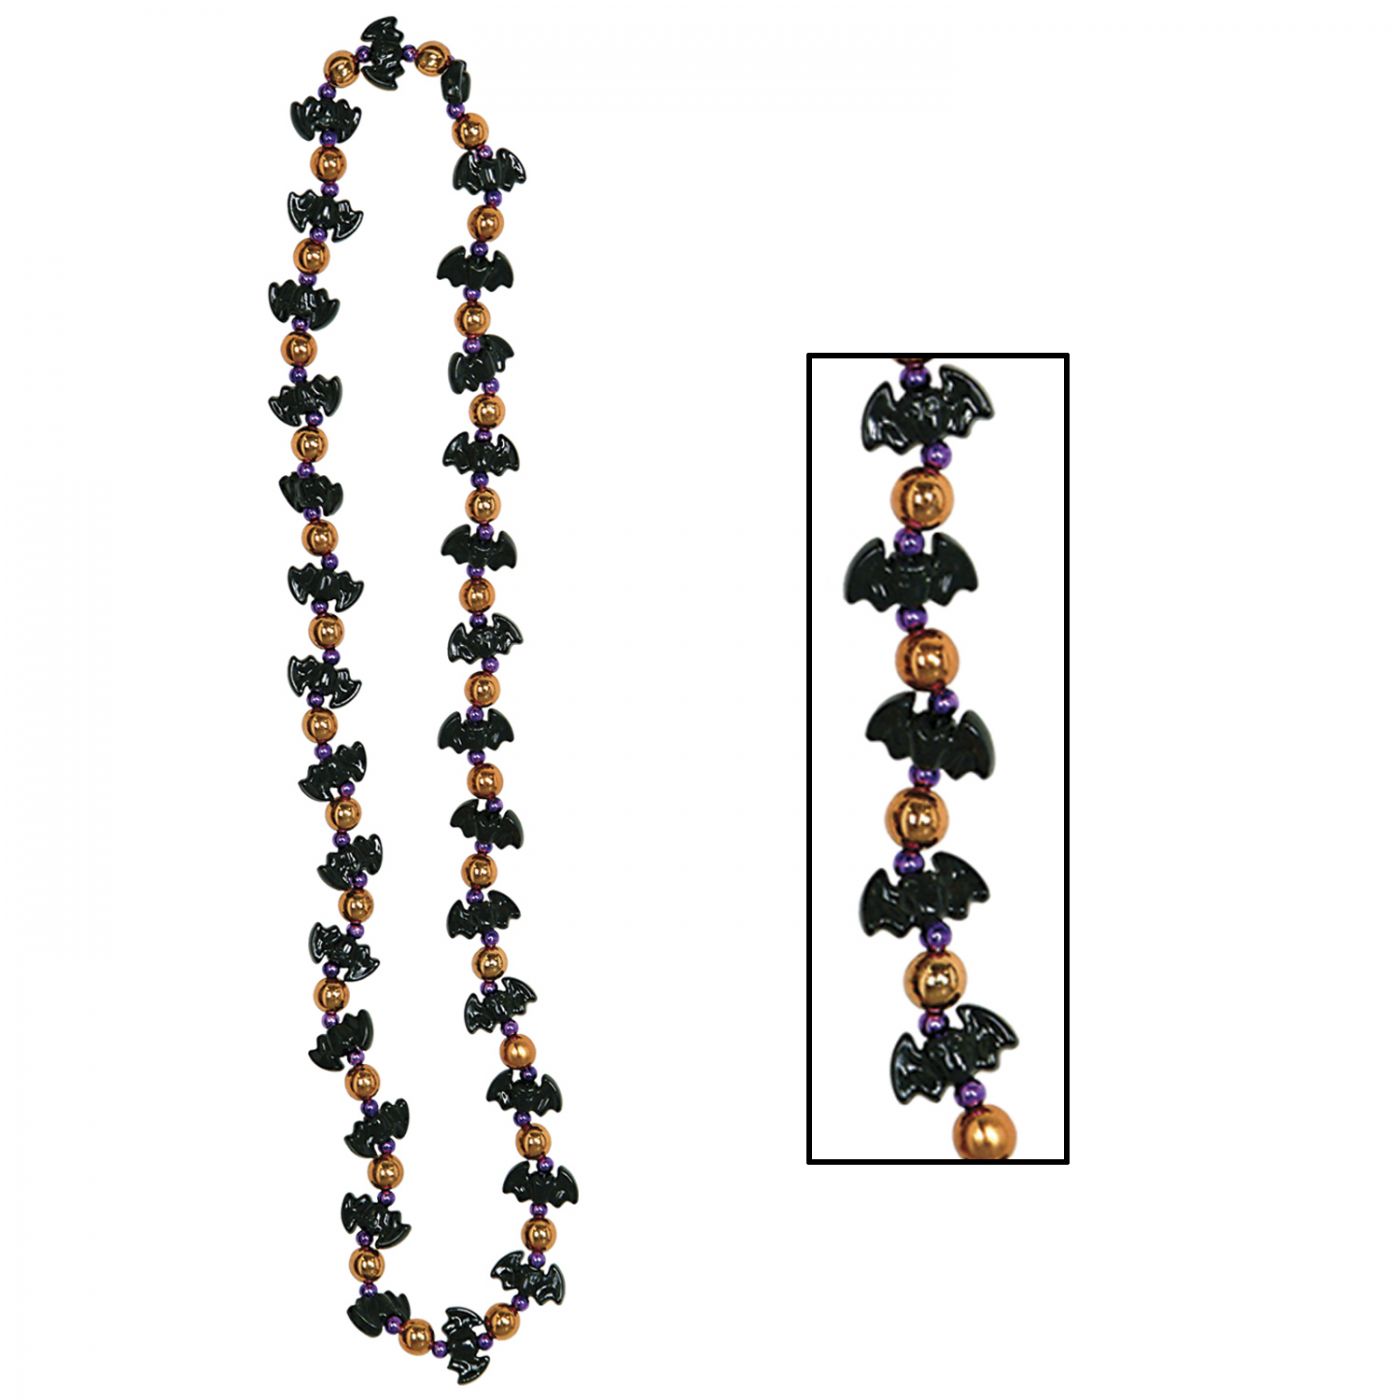 Bat Beads image